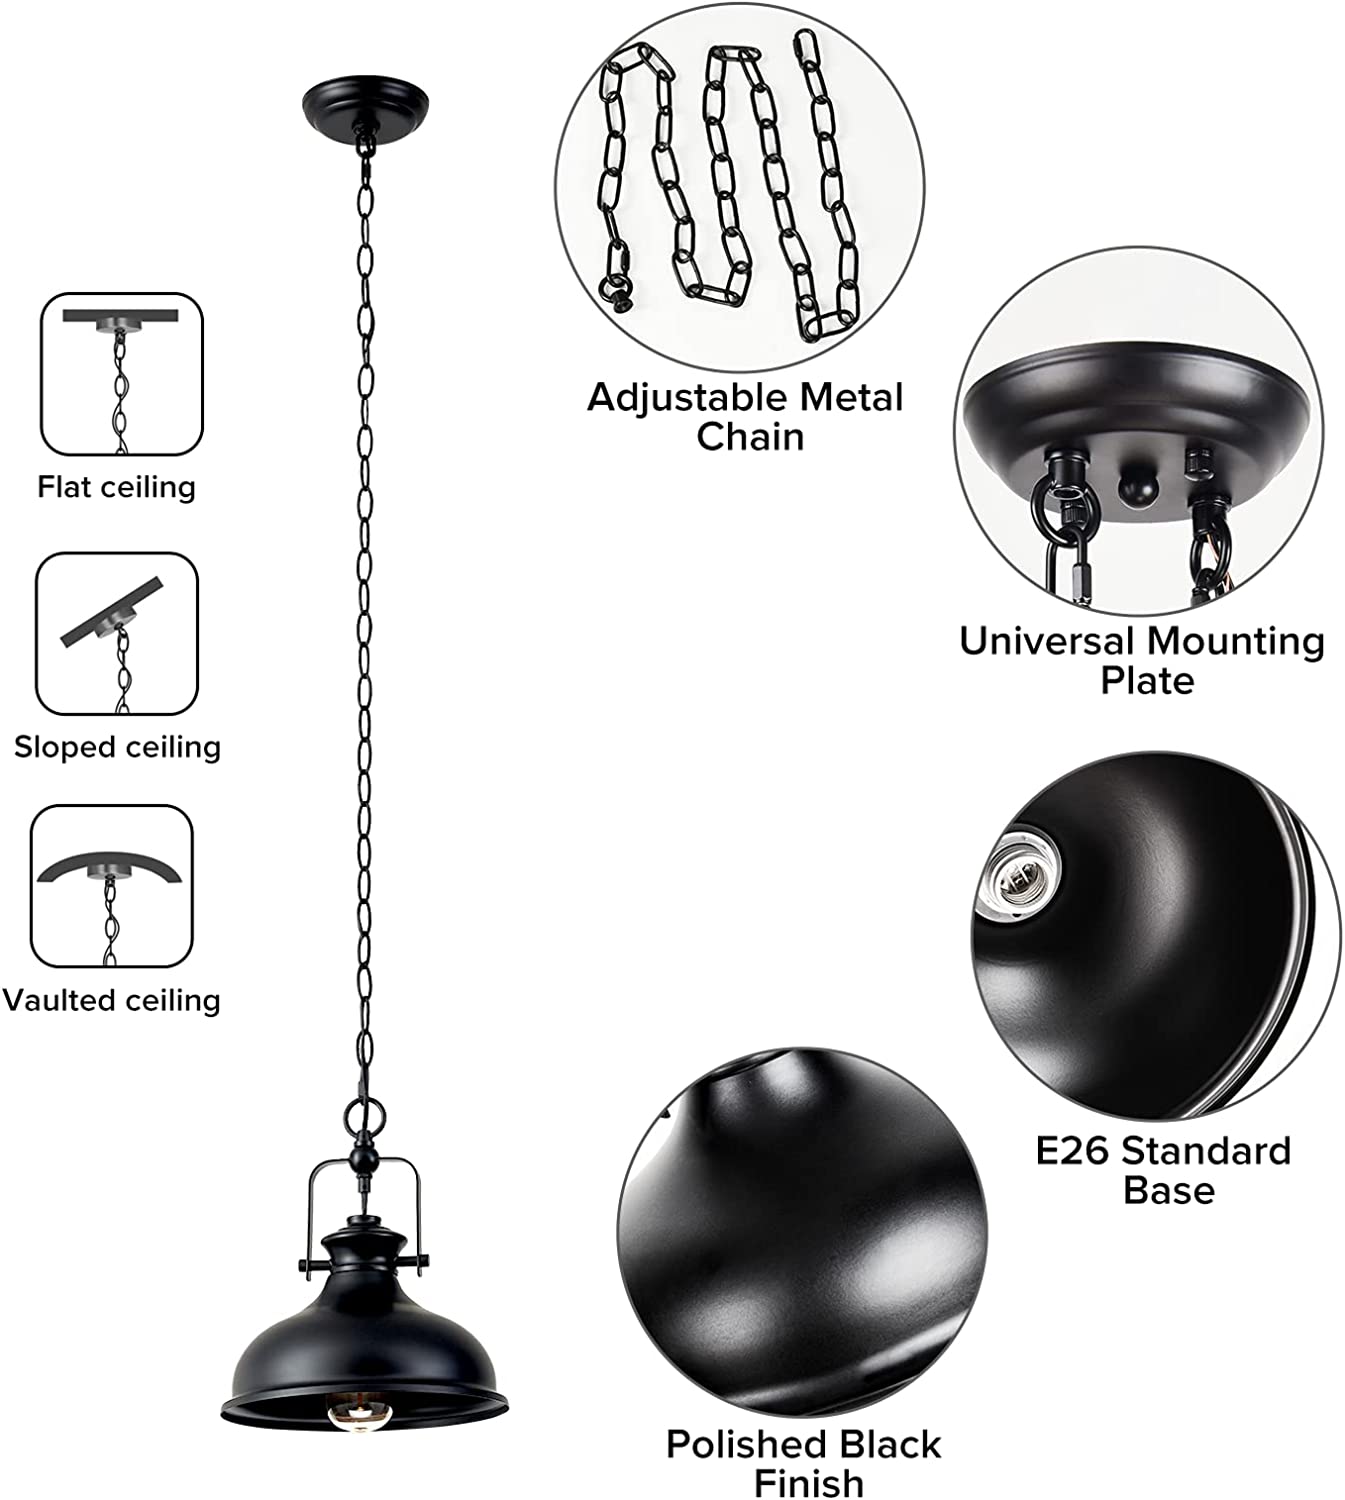 Industrial black pendant light farmhouse dome hanging light fixture